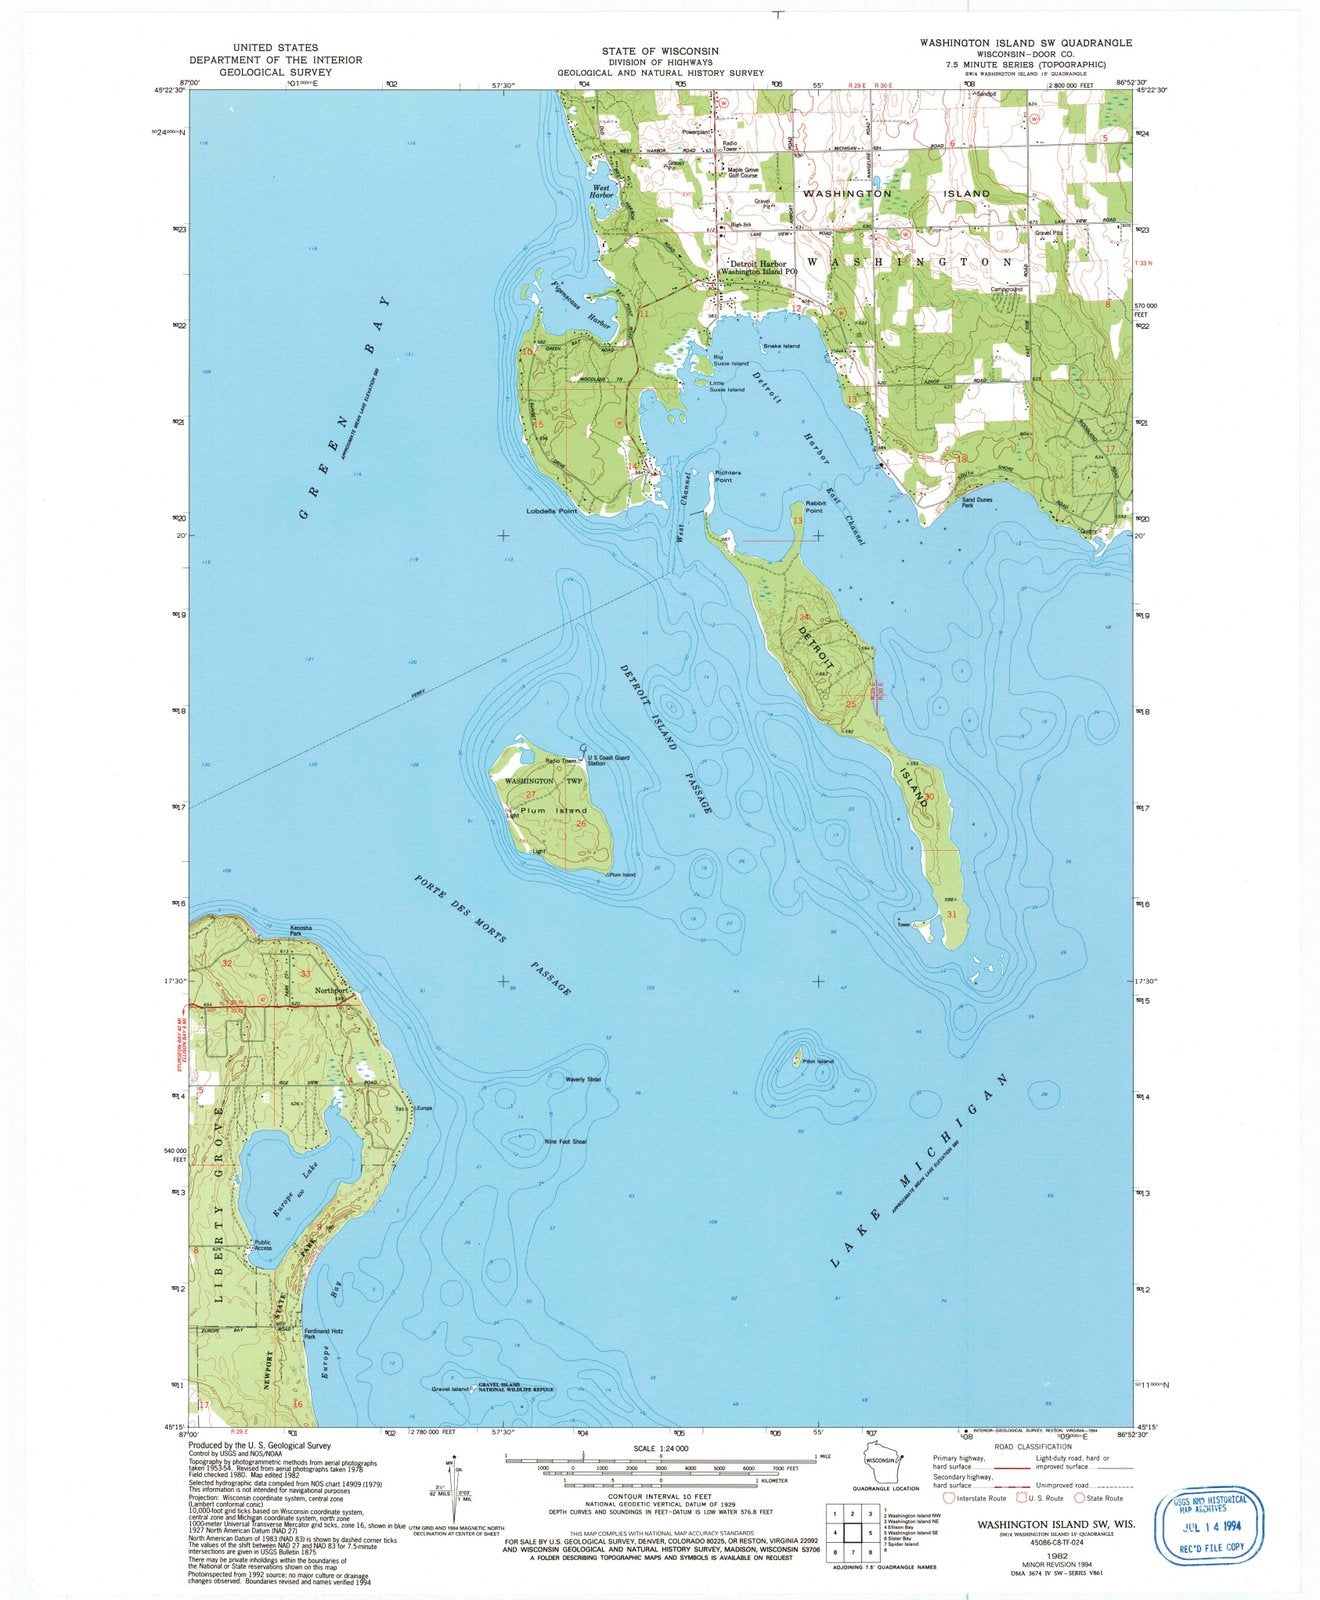 1982 Washington Island, WI - Wisconsin - USGS Topographic Map v2